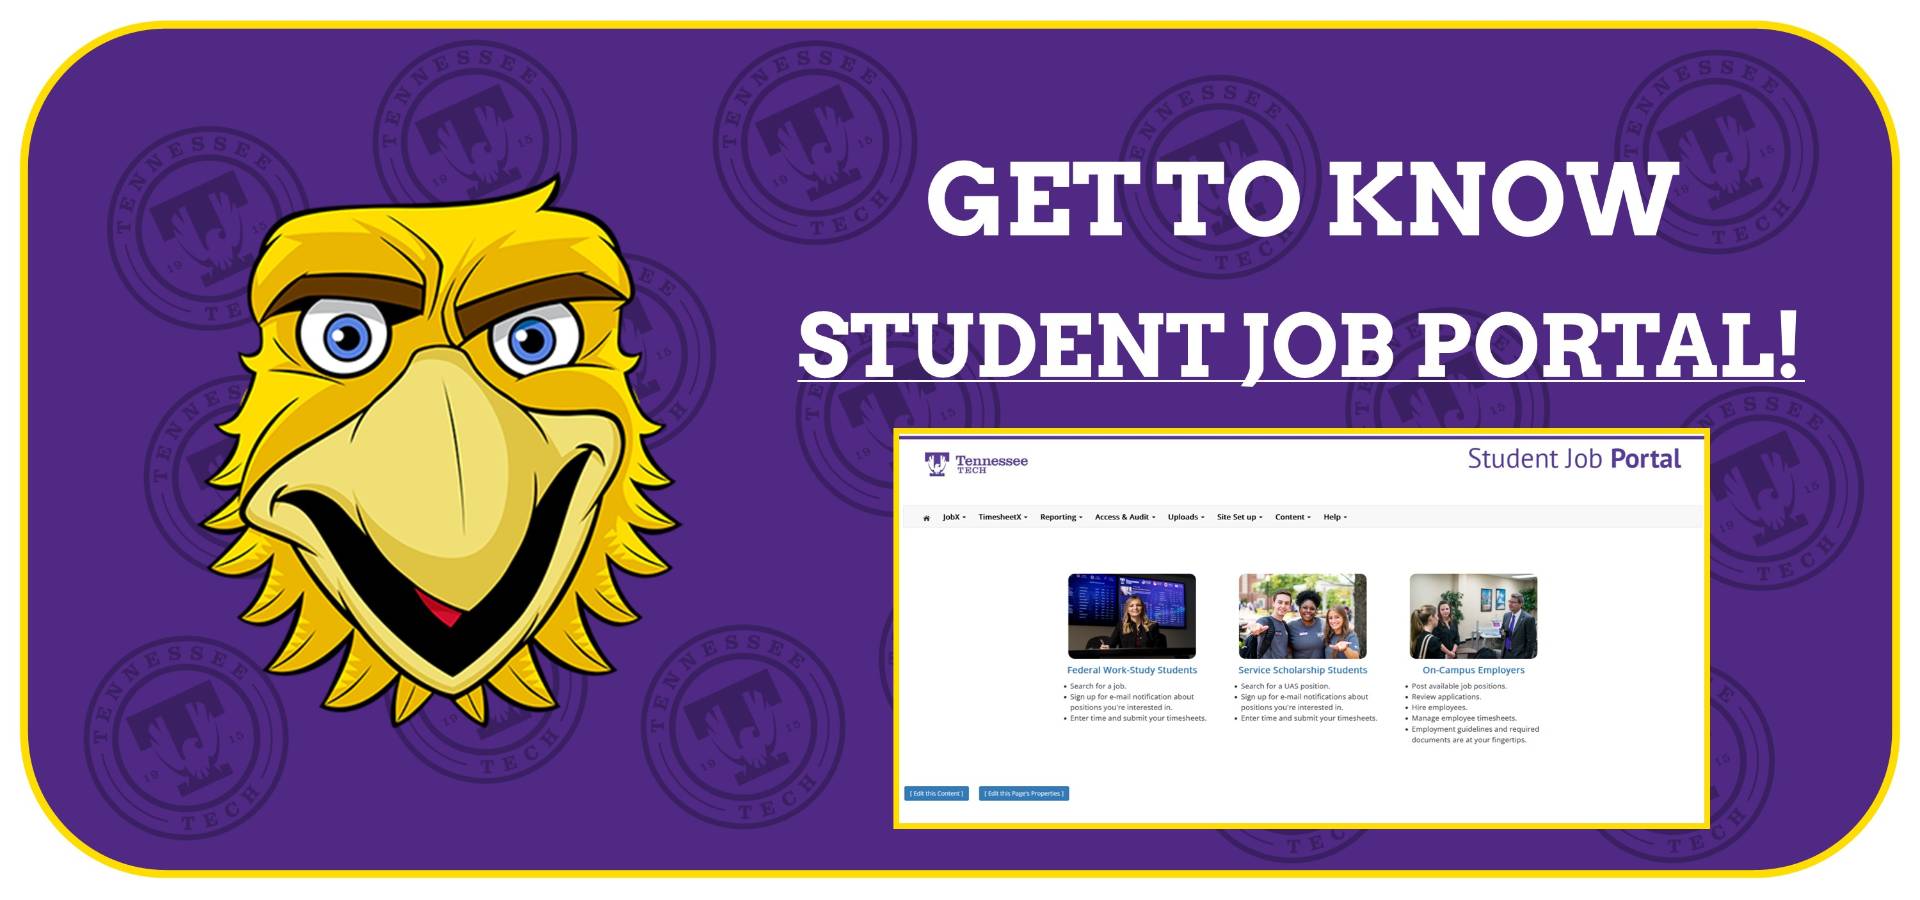 Get to Know Student Job Portal Image